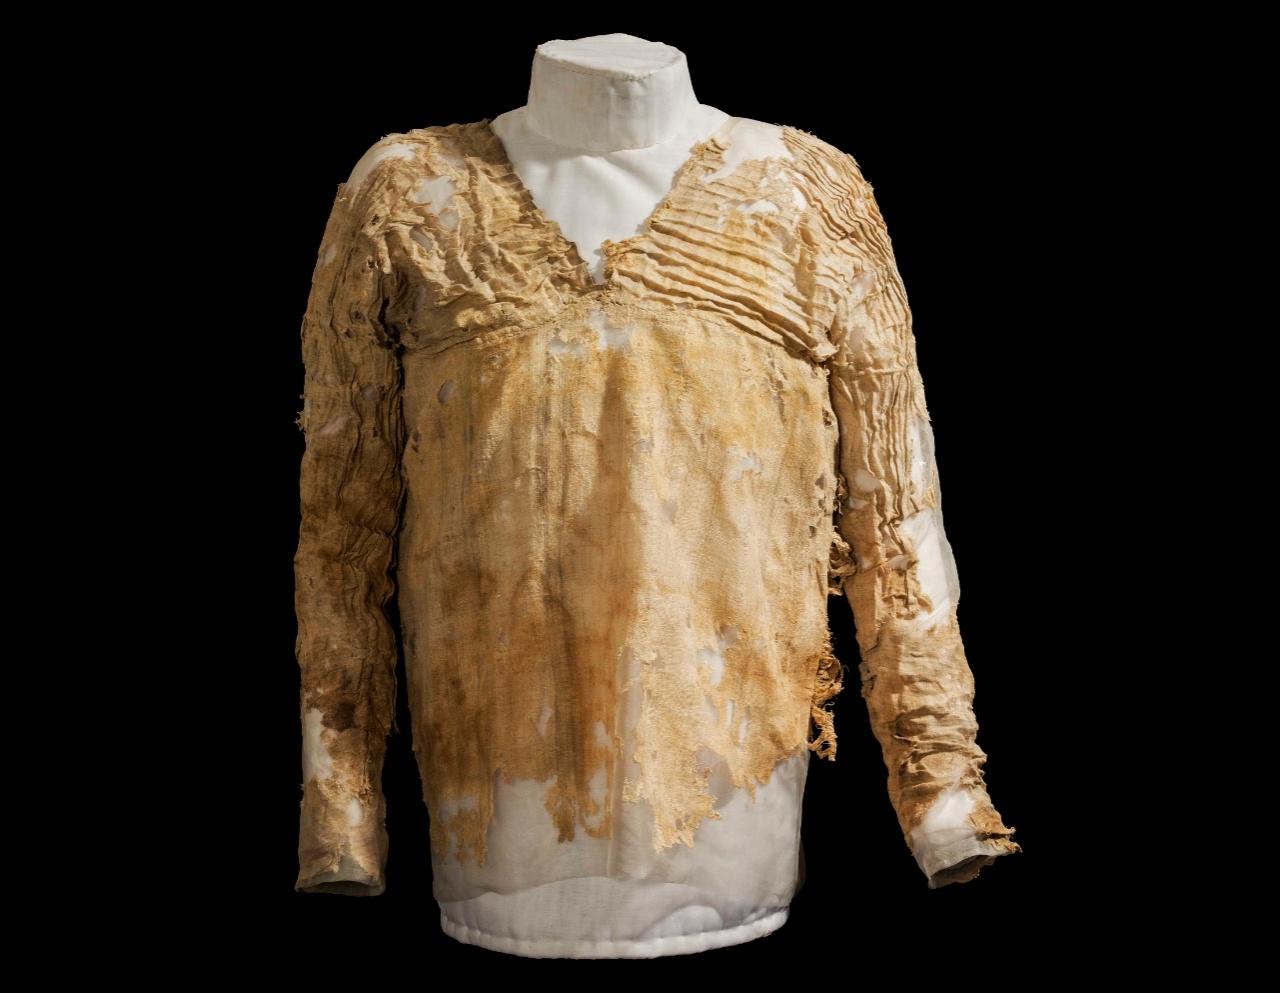 Kisah luar biasa di balik gaun tertua di dunia dari Mesir yang berusia lebih dari 5,000 tahun 1